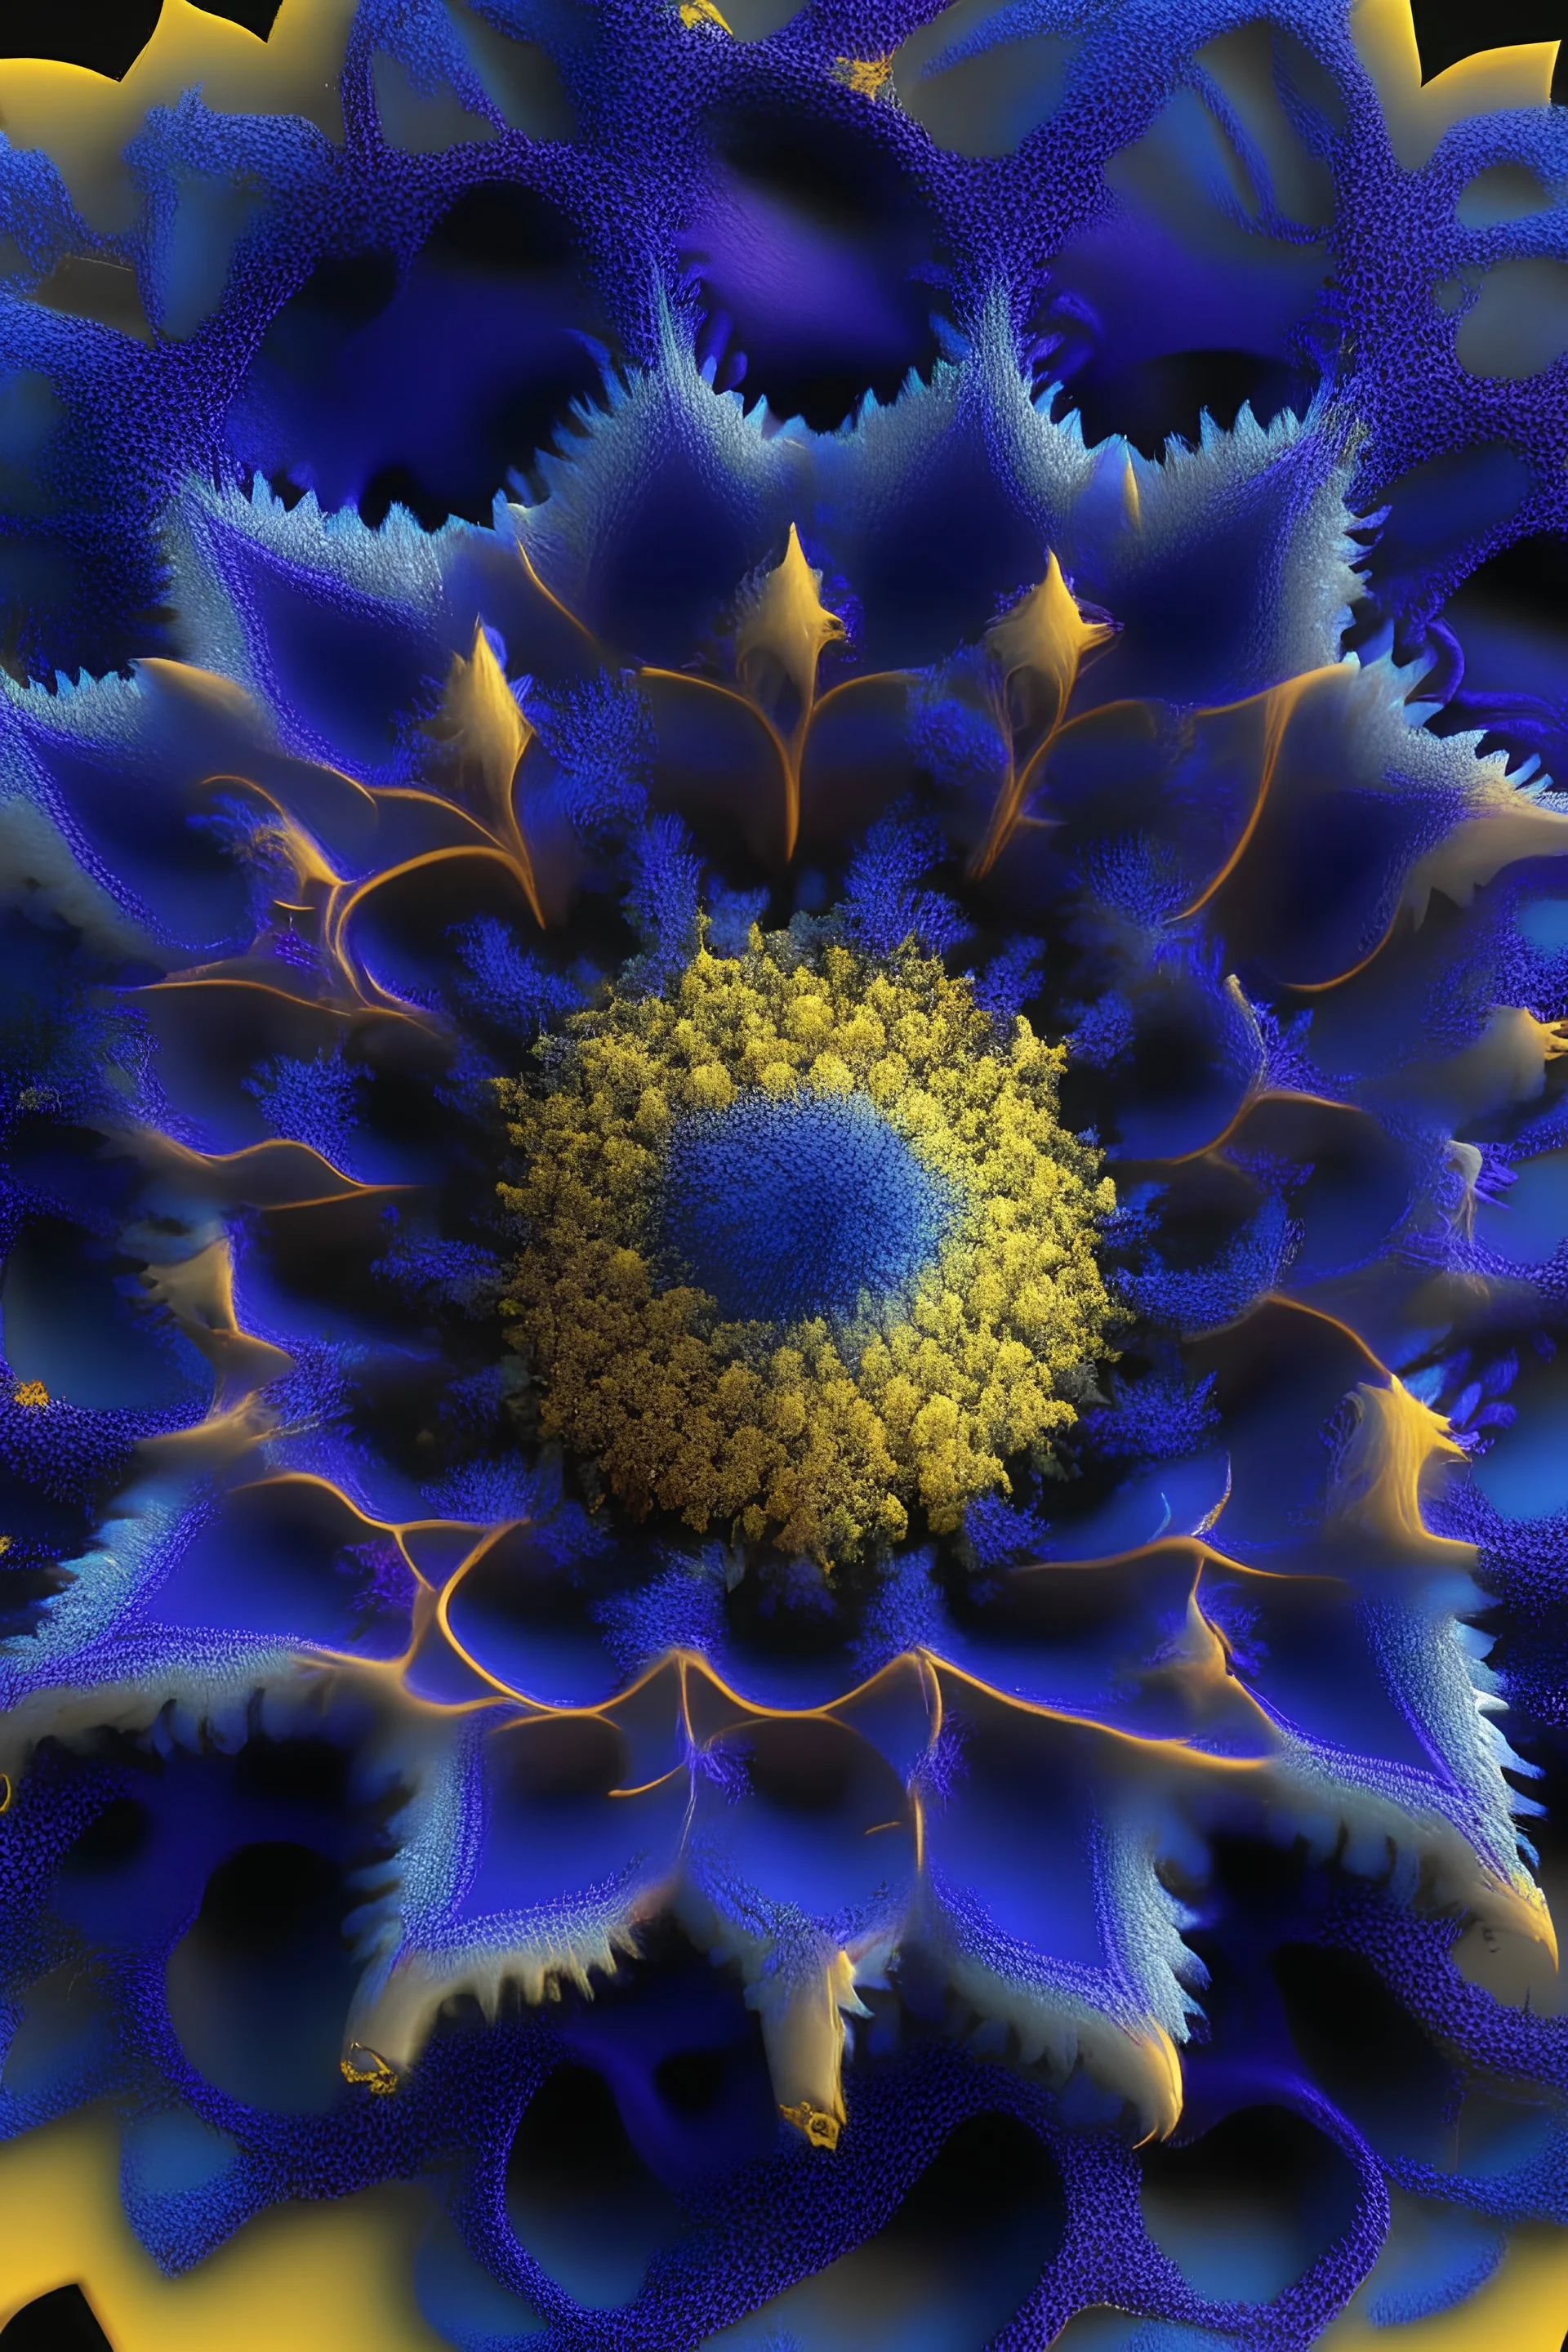 Fractal 3d deep closeup of a fractal flower deep purples blues and yellows photorealistic 8k resolution symmetrical